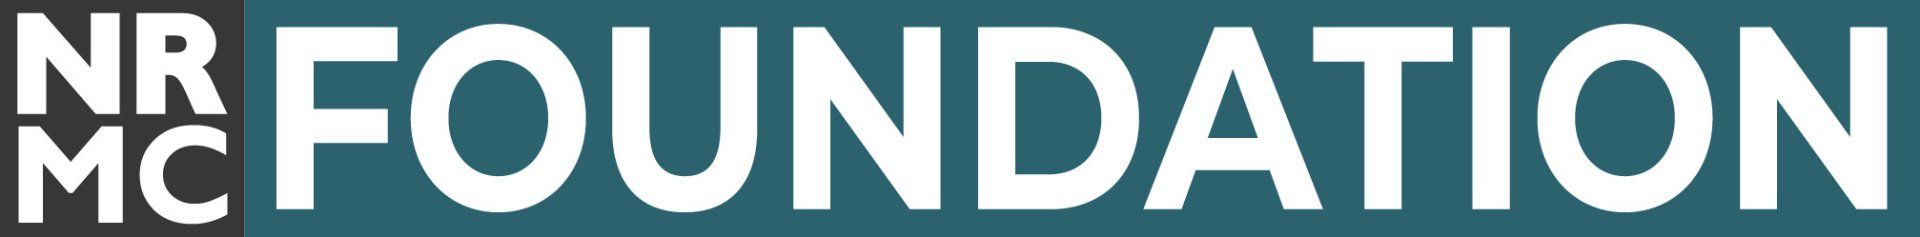 NRMC Foundation Brick logo